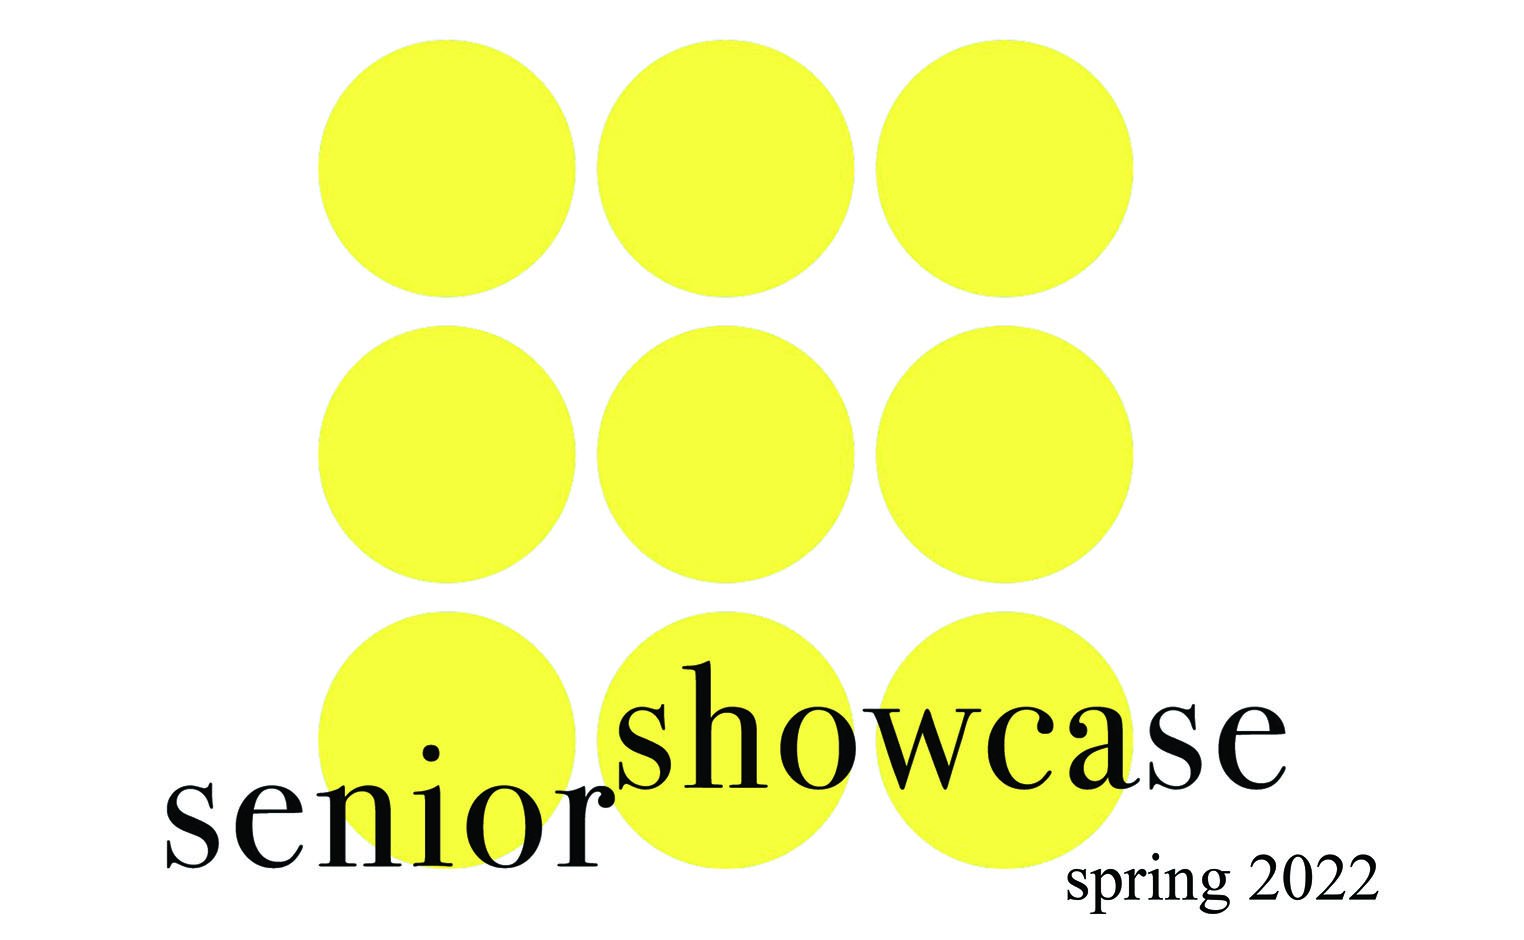 Senior showcase spring 2022